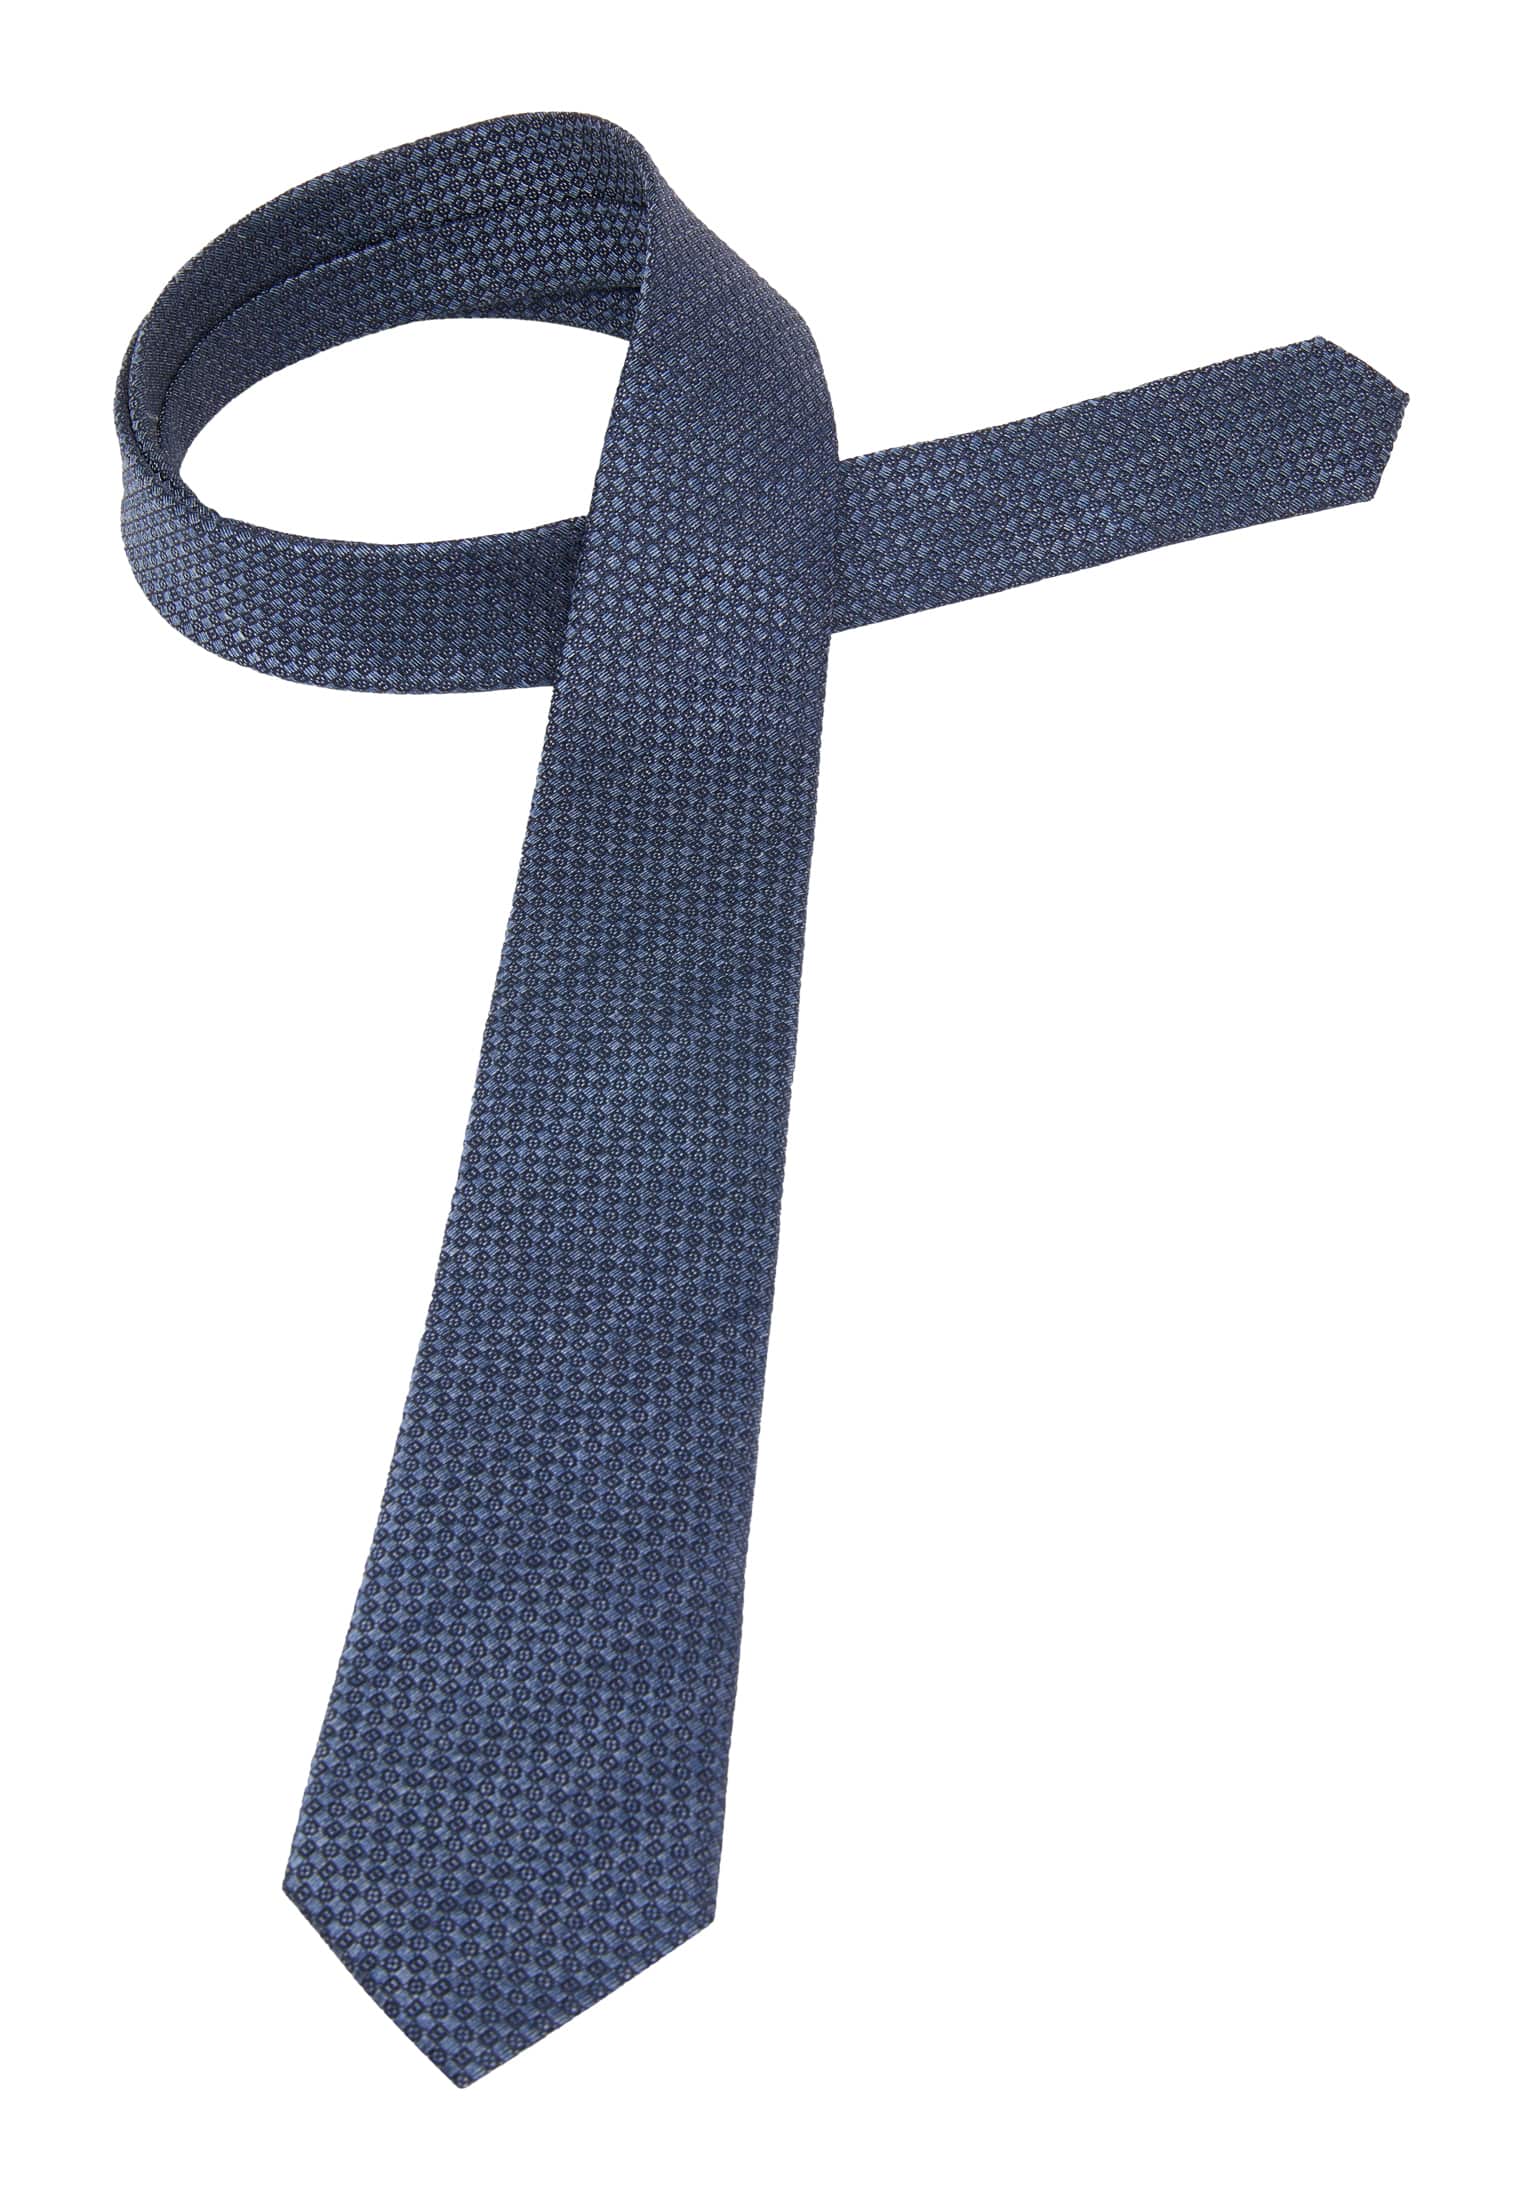 Krawatte in blaugrau strukturiert | blaugrau | 142 | 1AC02045-01-63-142 | Breite Krawatten